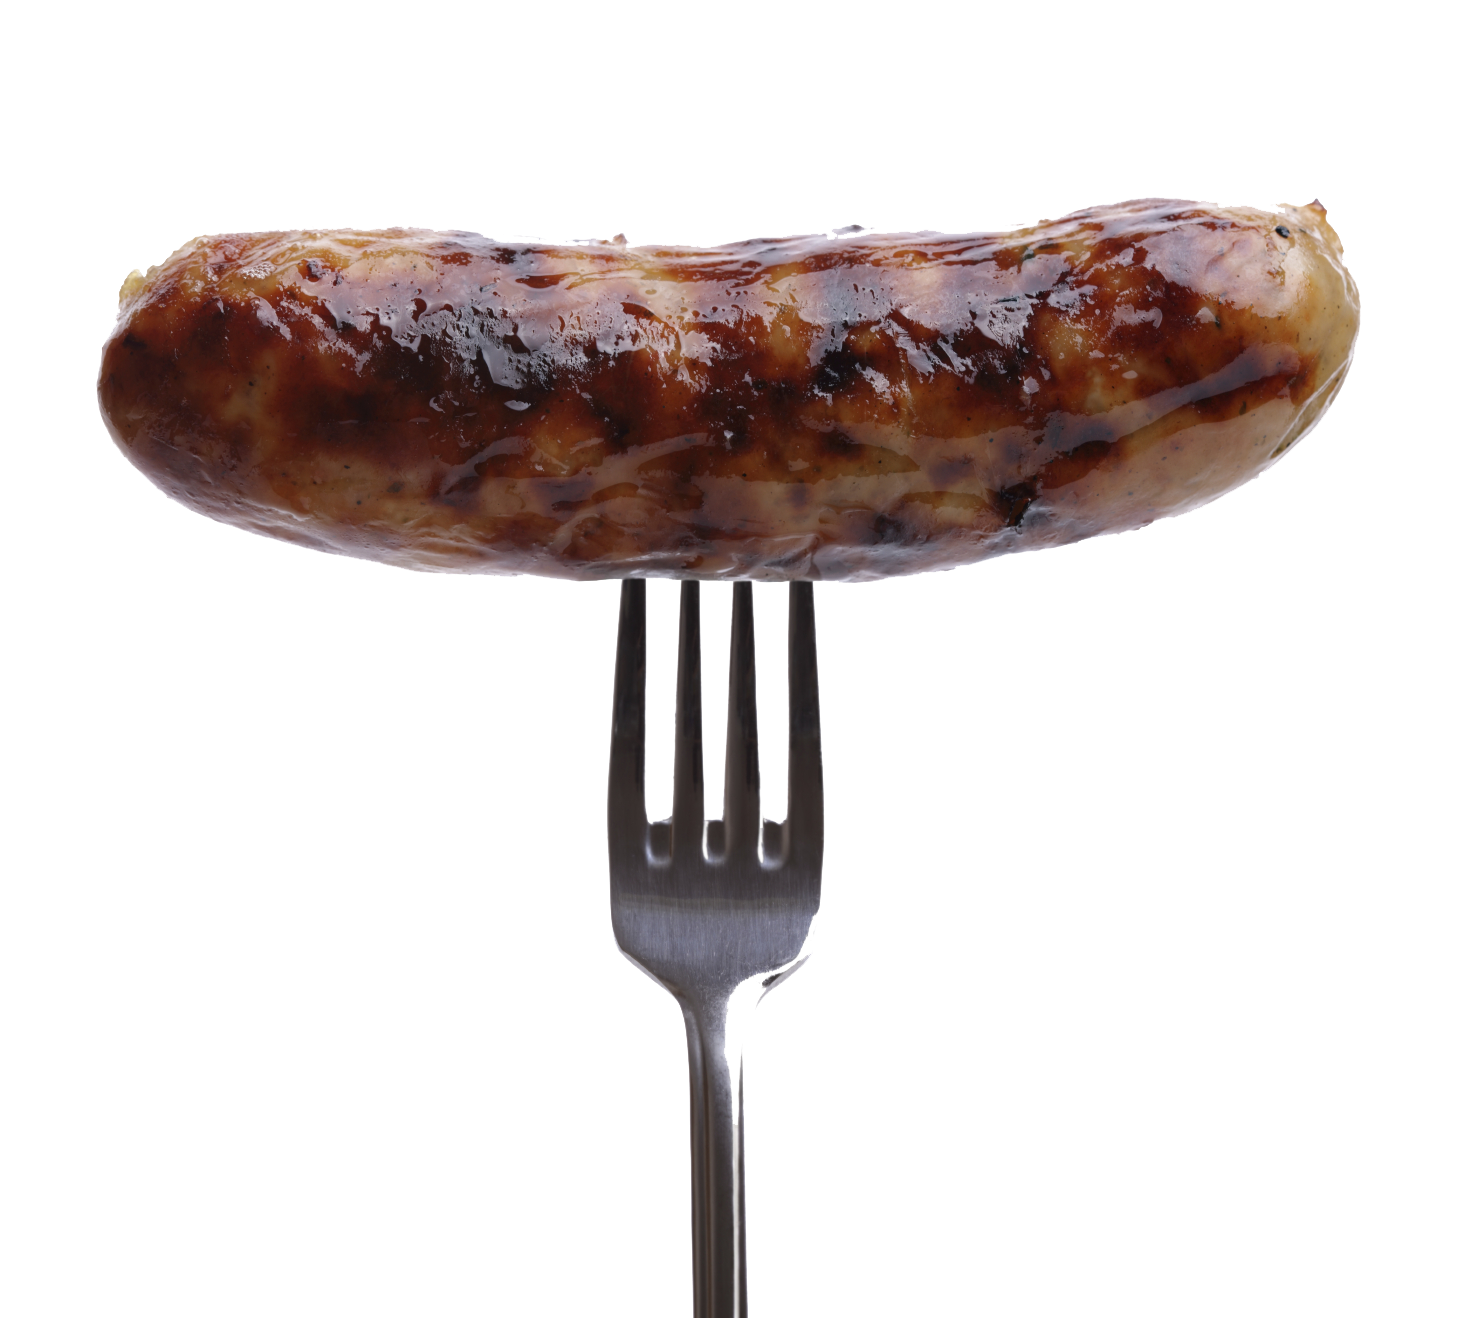 Sausage PNG - 15492